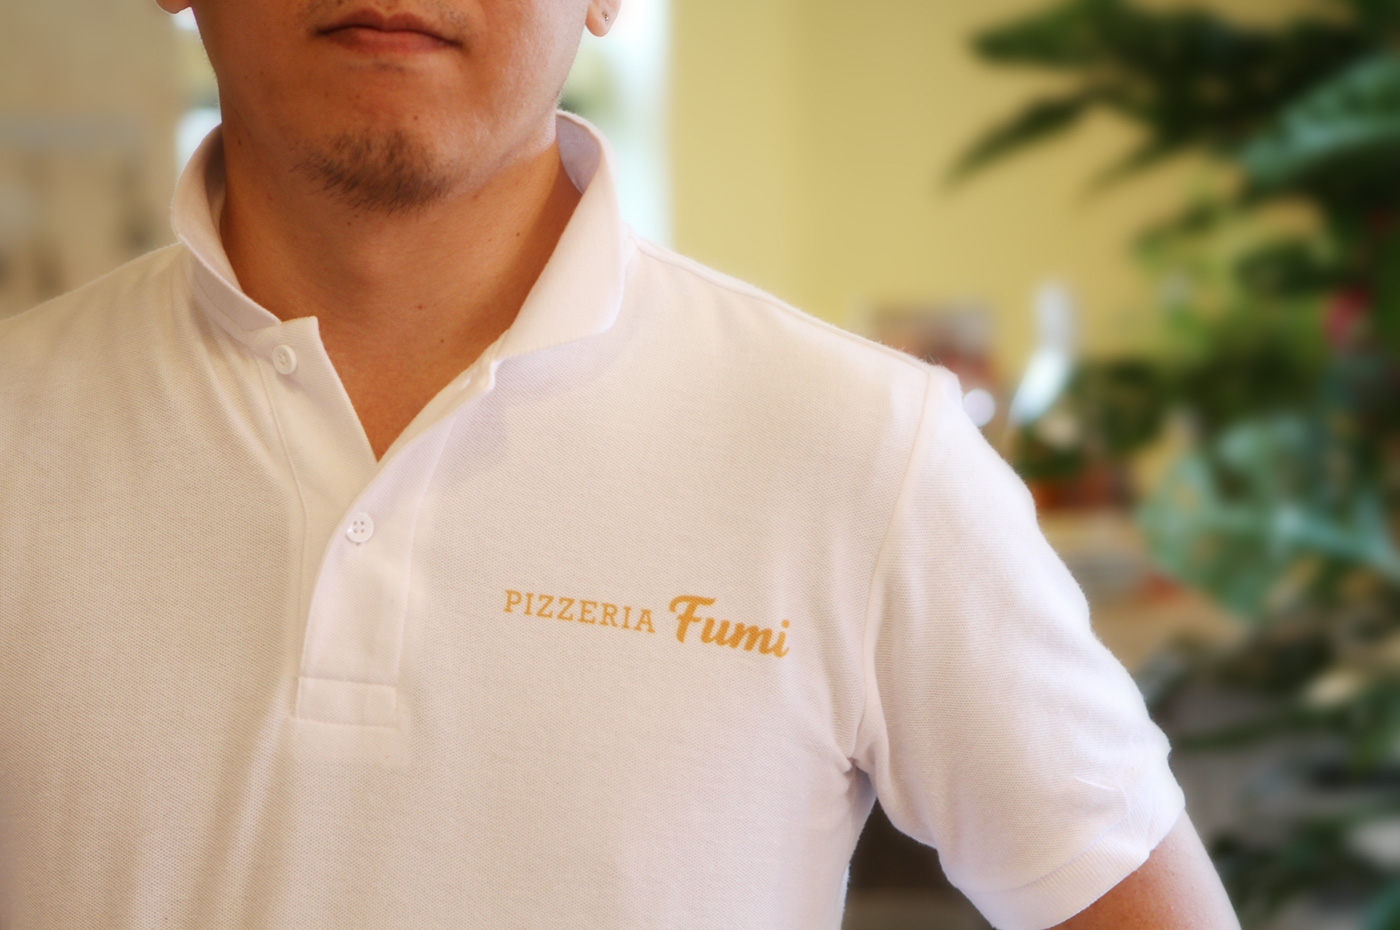 PIZZERIA fumi［飲食店］ポロシャツデザイン